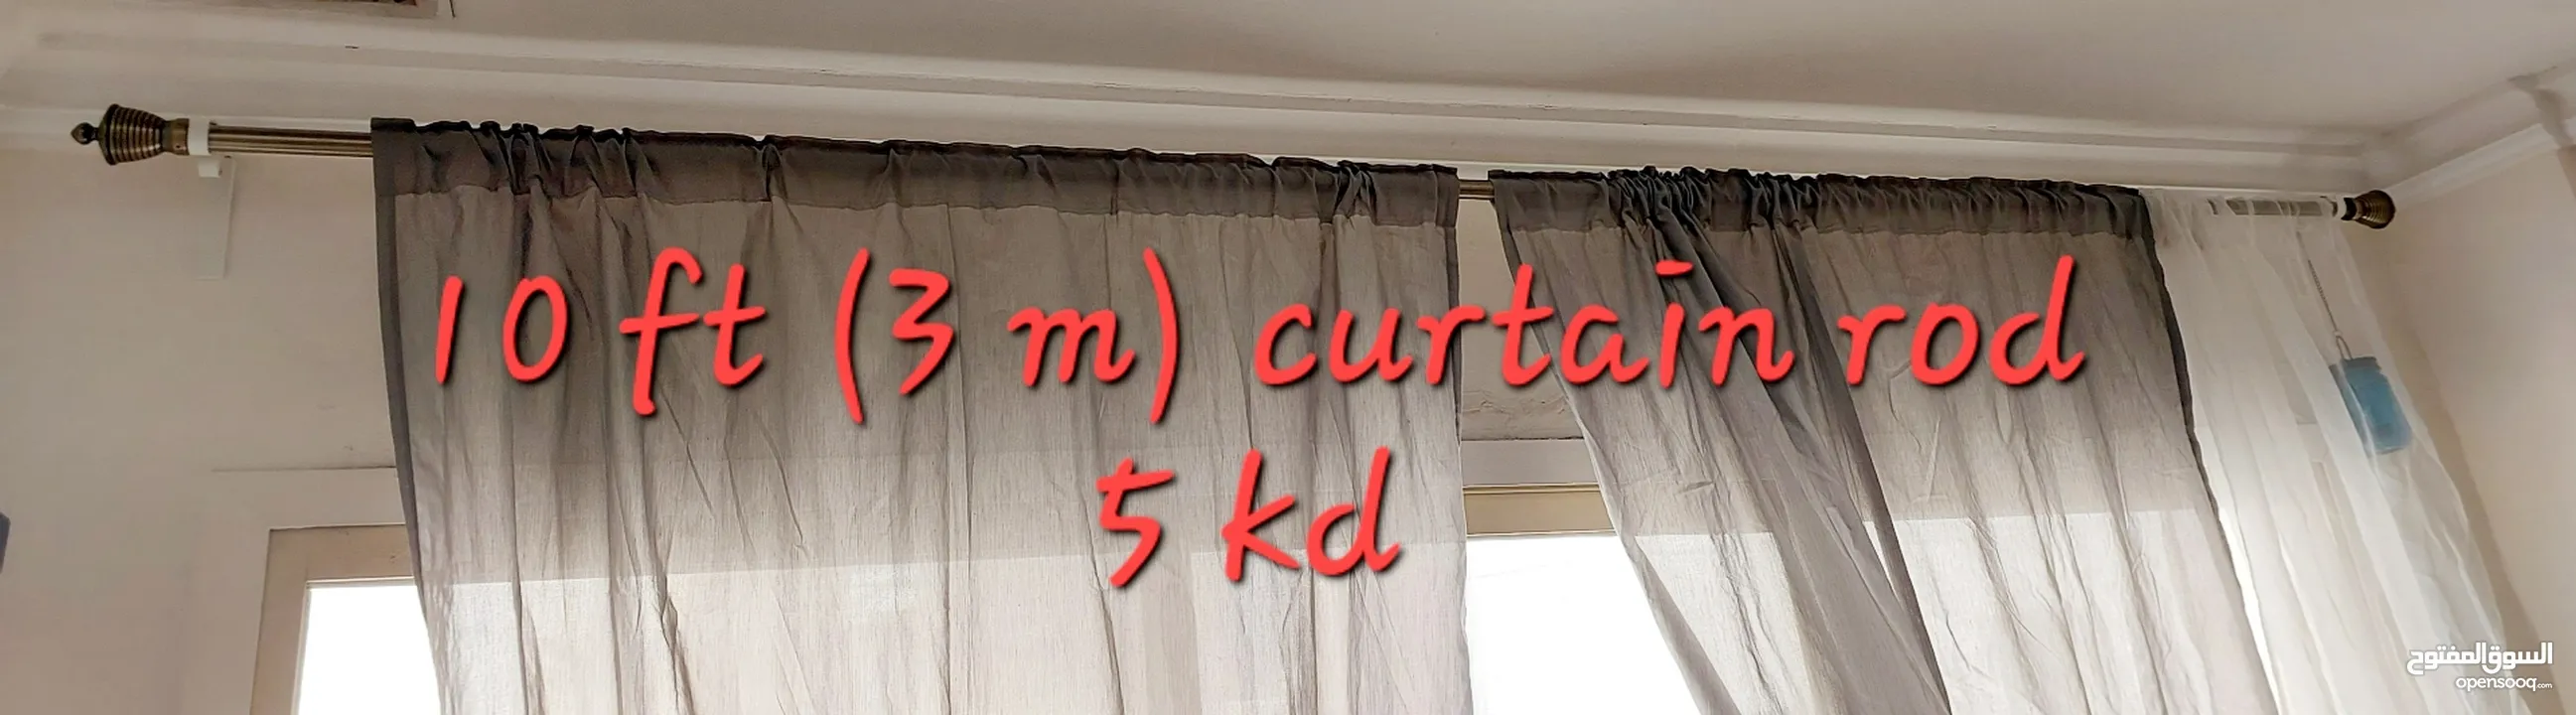 plants Curtains rod